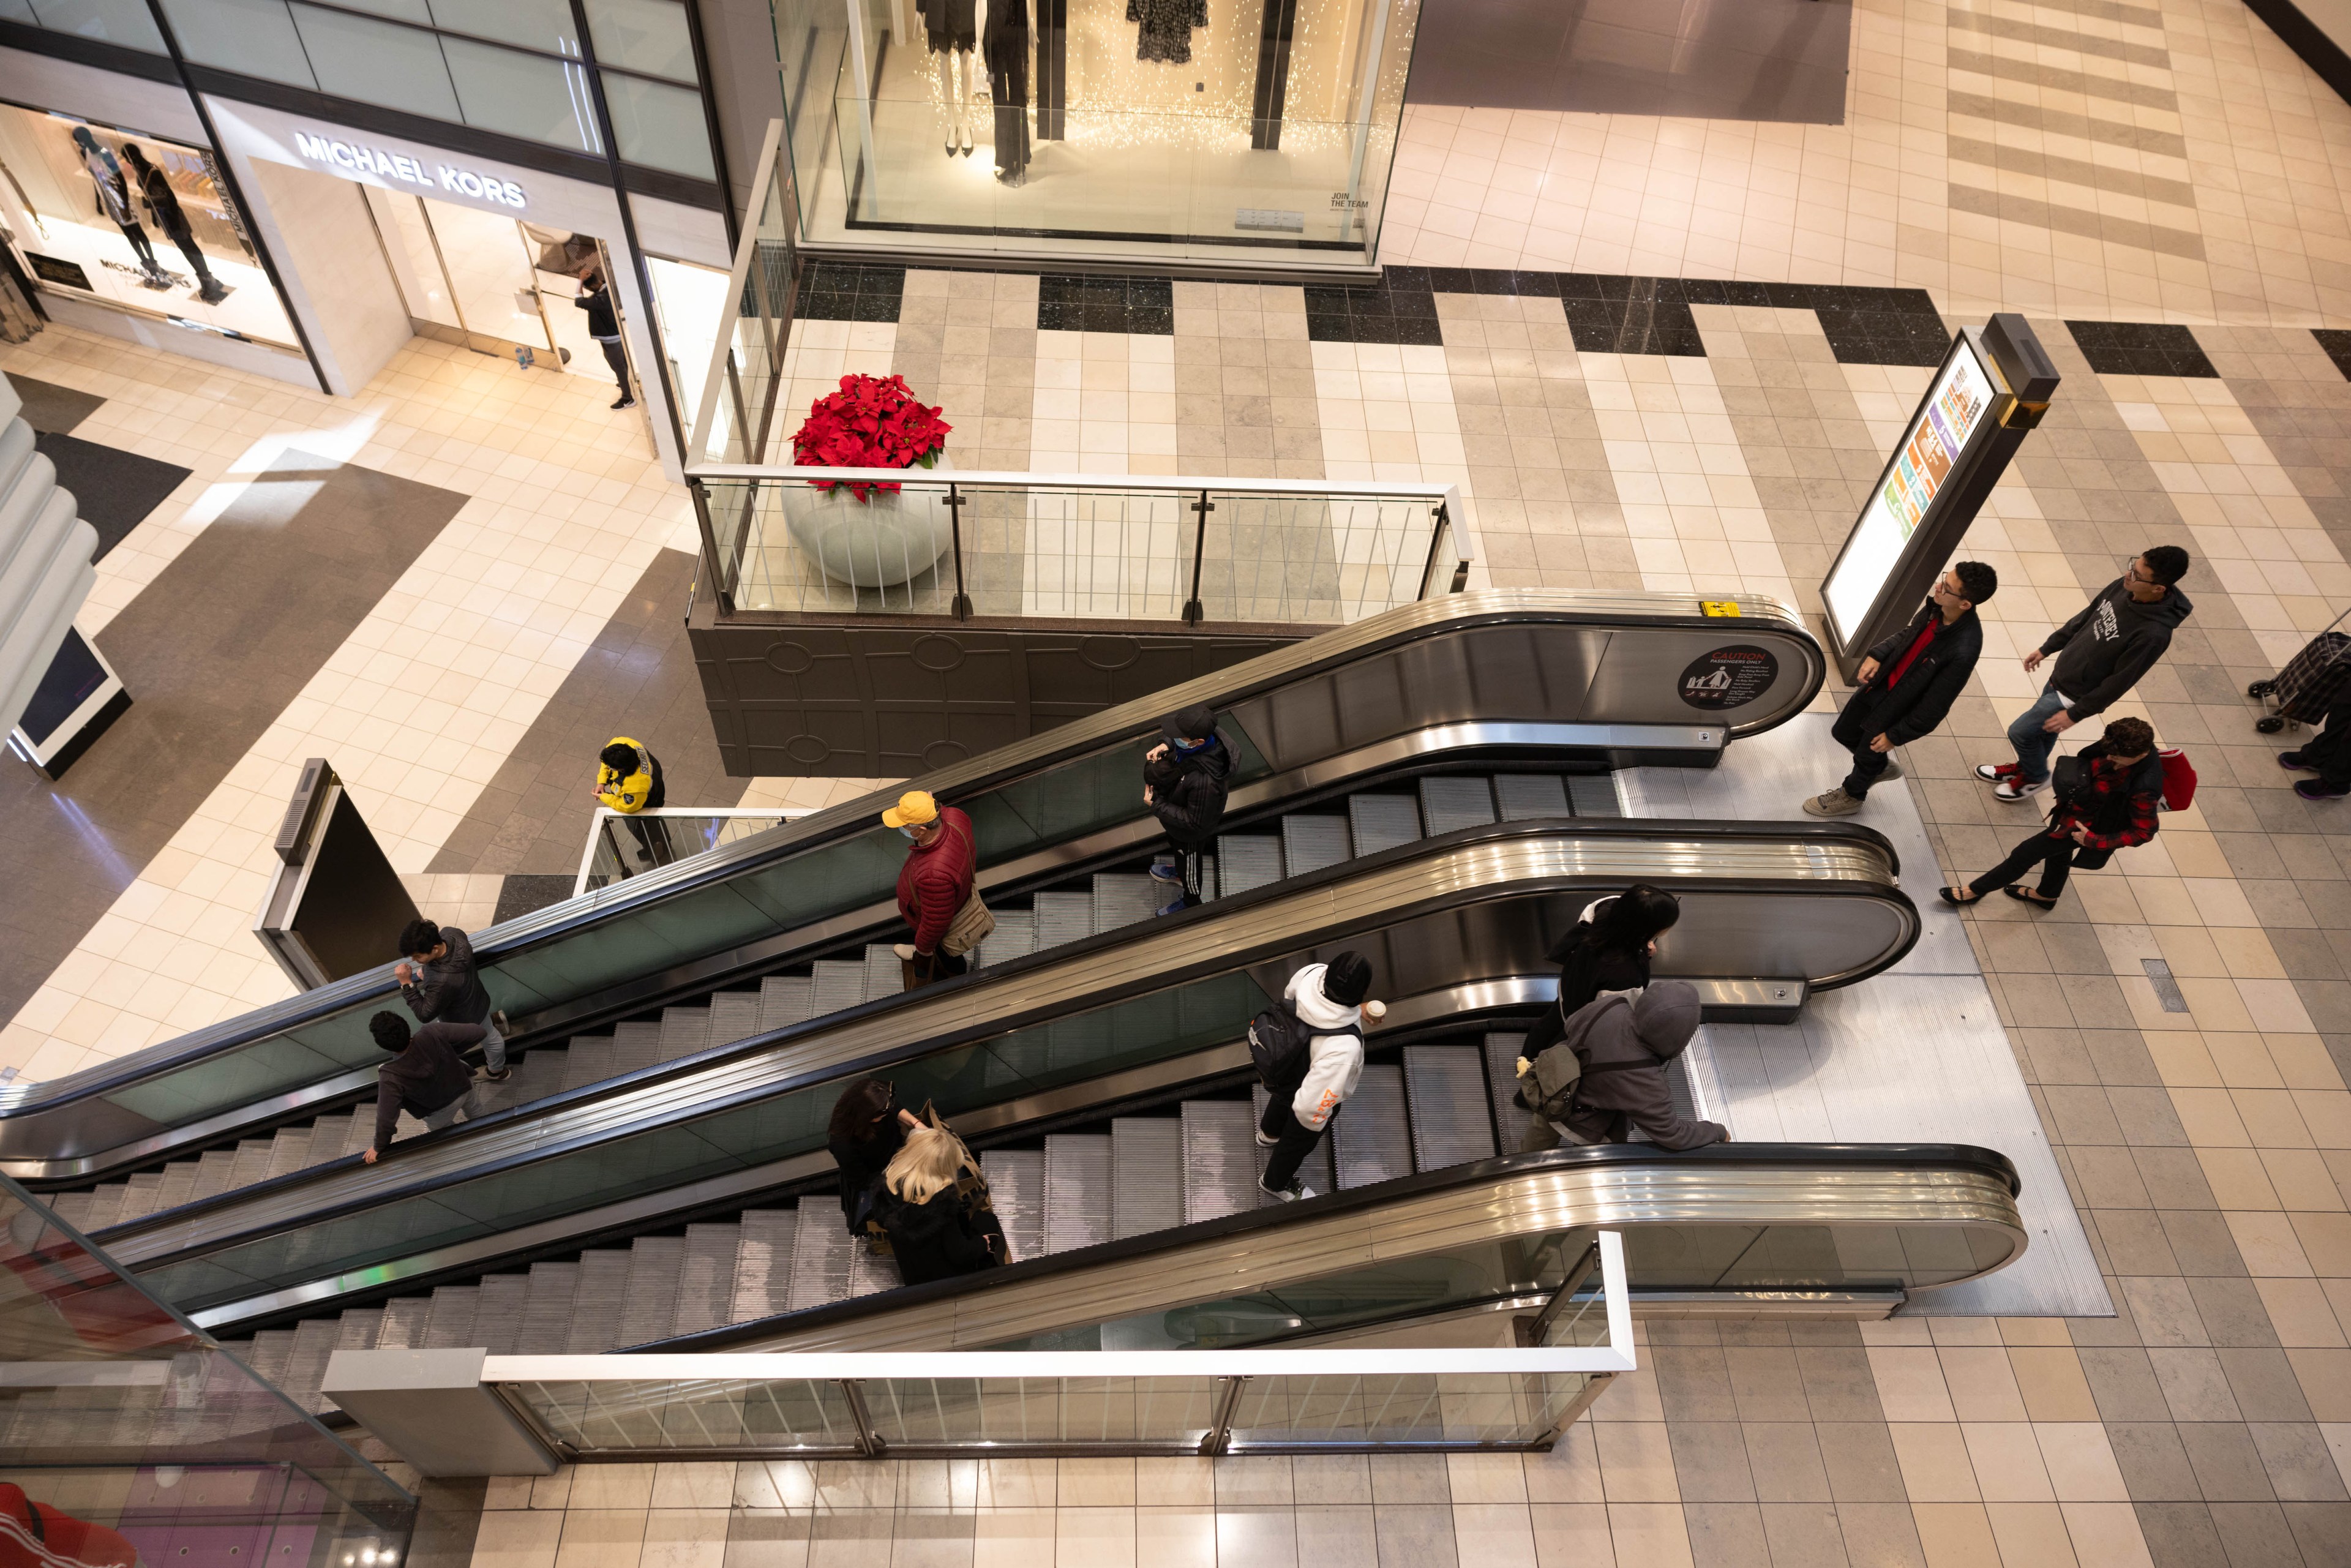 Shoppers use the escalator in San Francisco Centre.